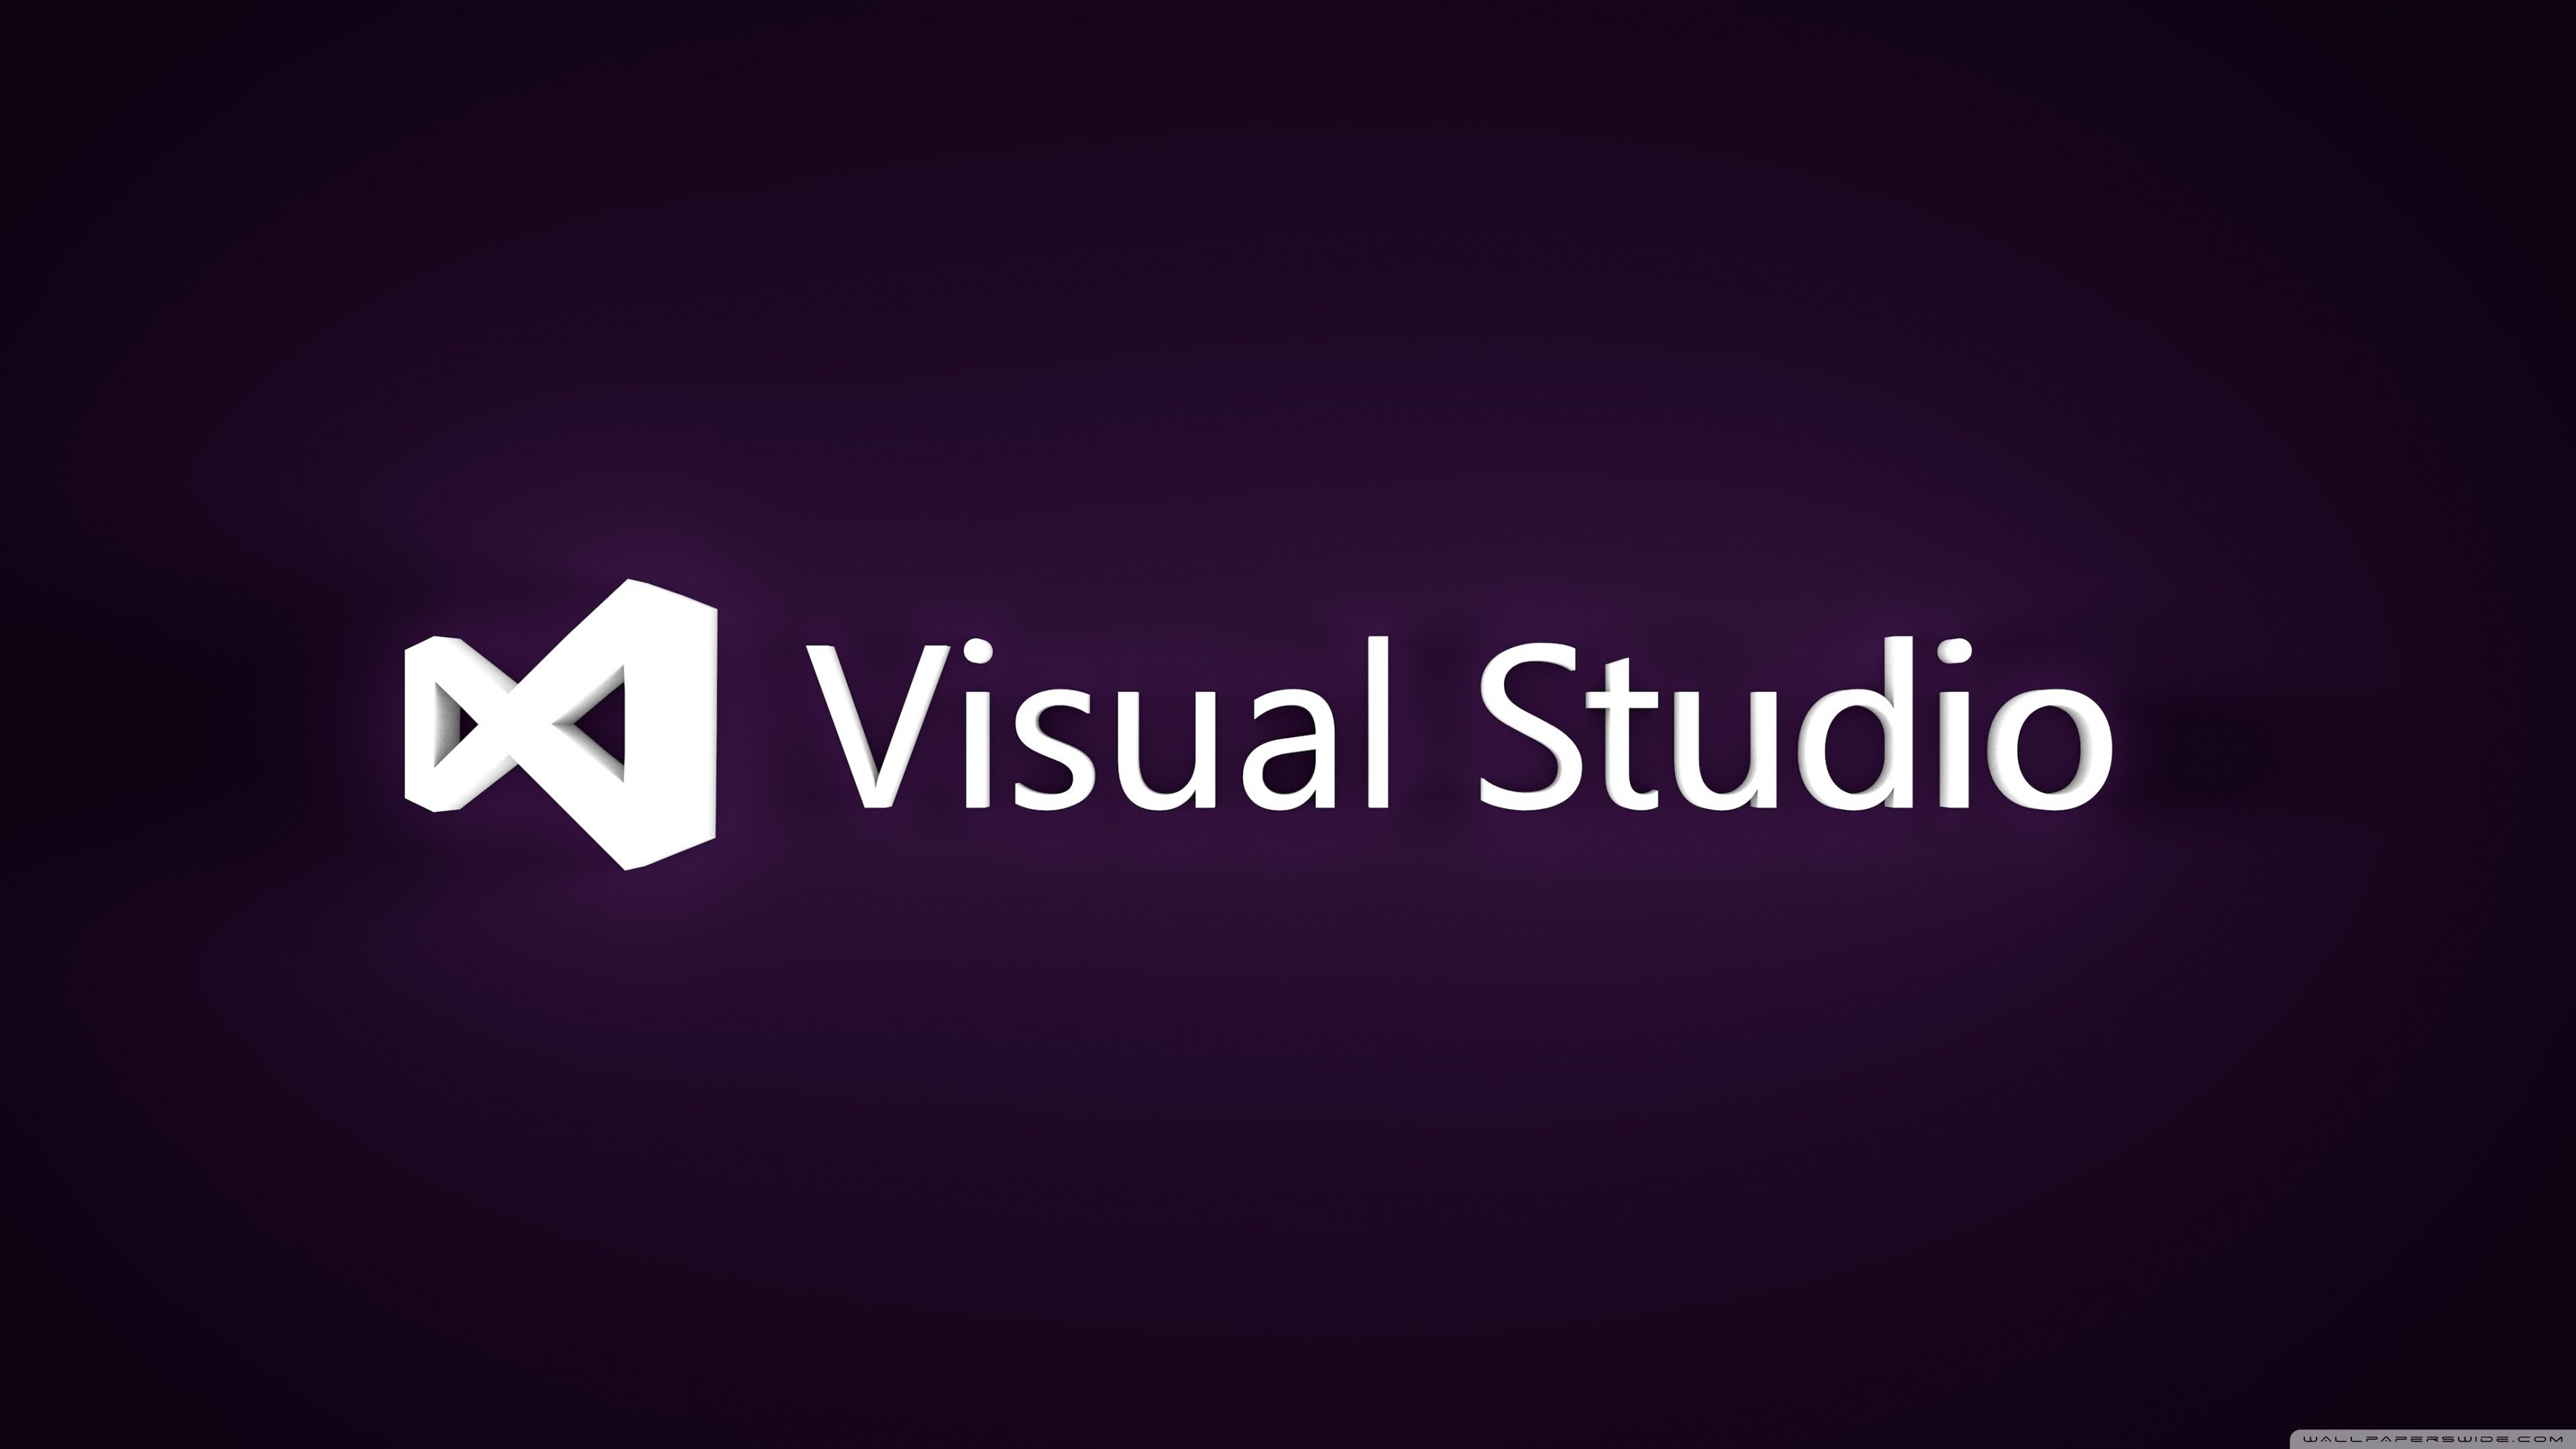 Microsoft Visual Studio wallpaper Ultra HD Desktop Background Wallpaper for  : Widescreen & UltraWide Desktop & Laptop : Multi Display, Dual & Triple  Monitor : Tablet : Smartphone